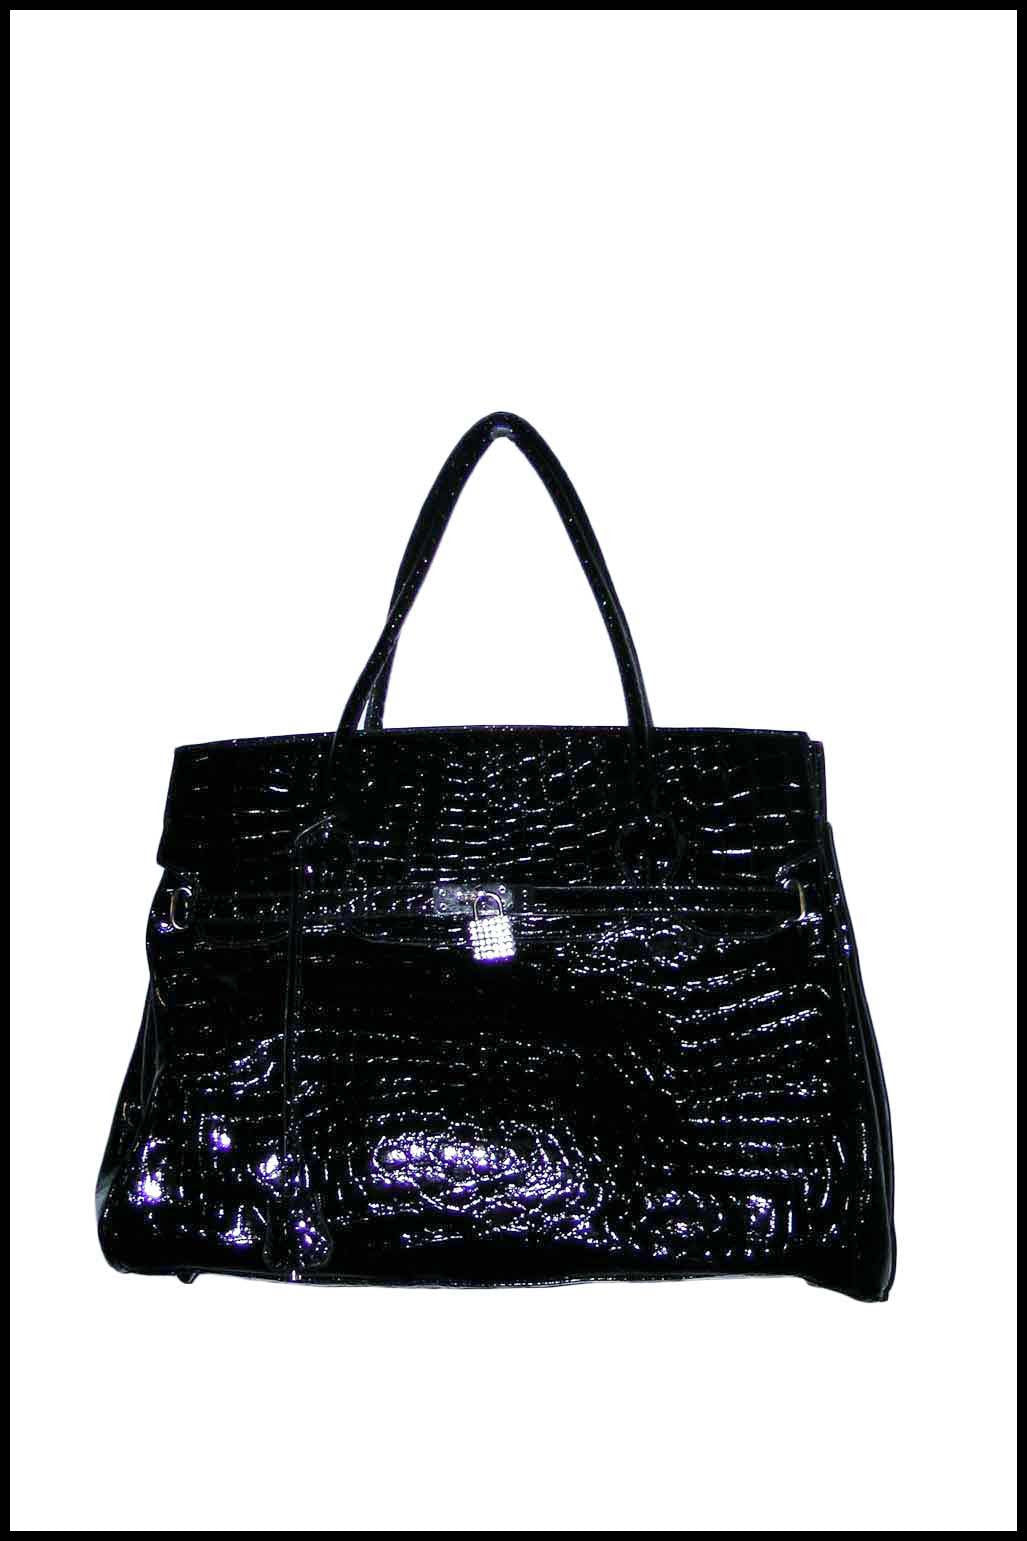 Extra-large Structured Patent Faux Crocodile Skin Handbag